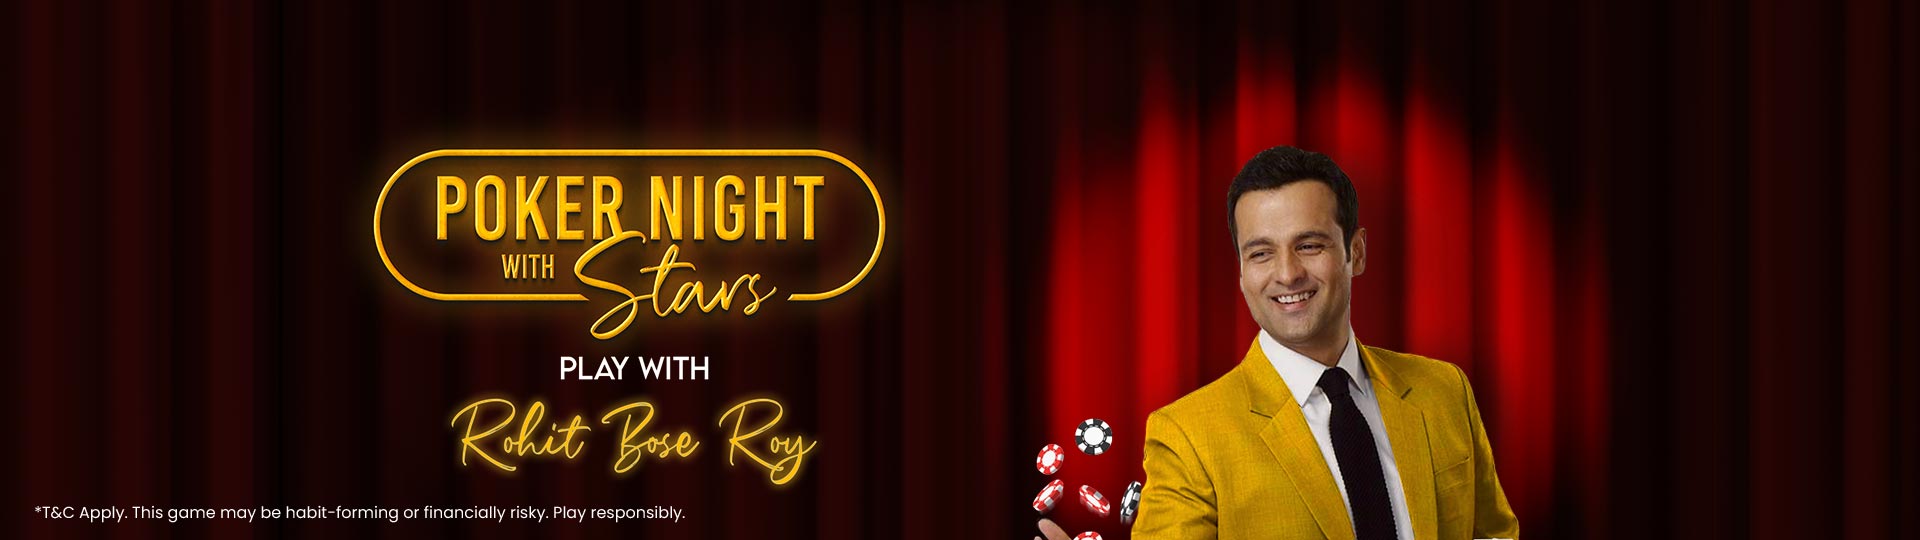 poker night with Rohit Boss Roy